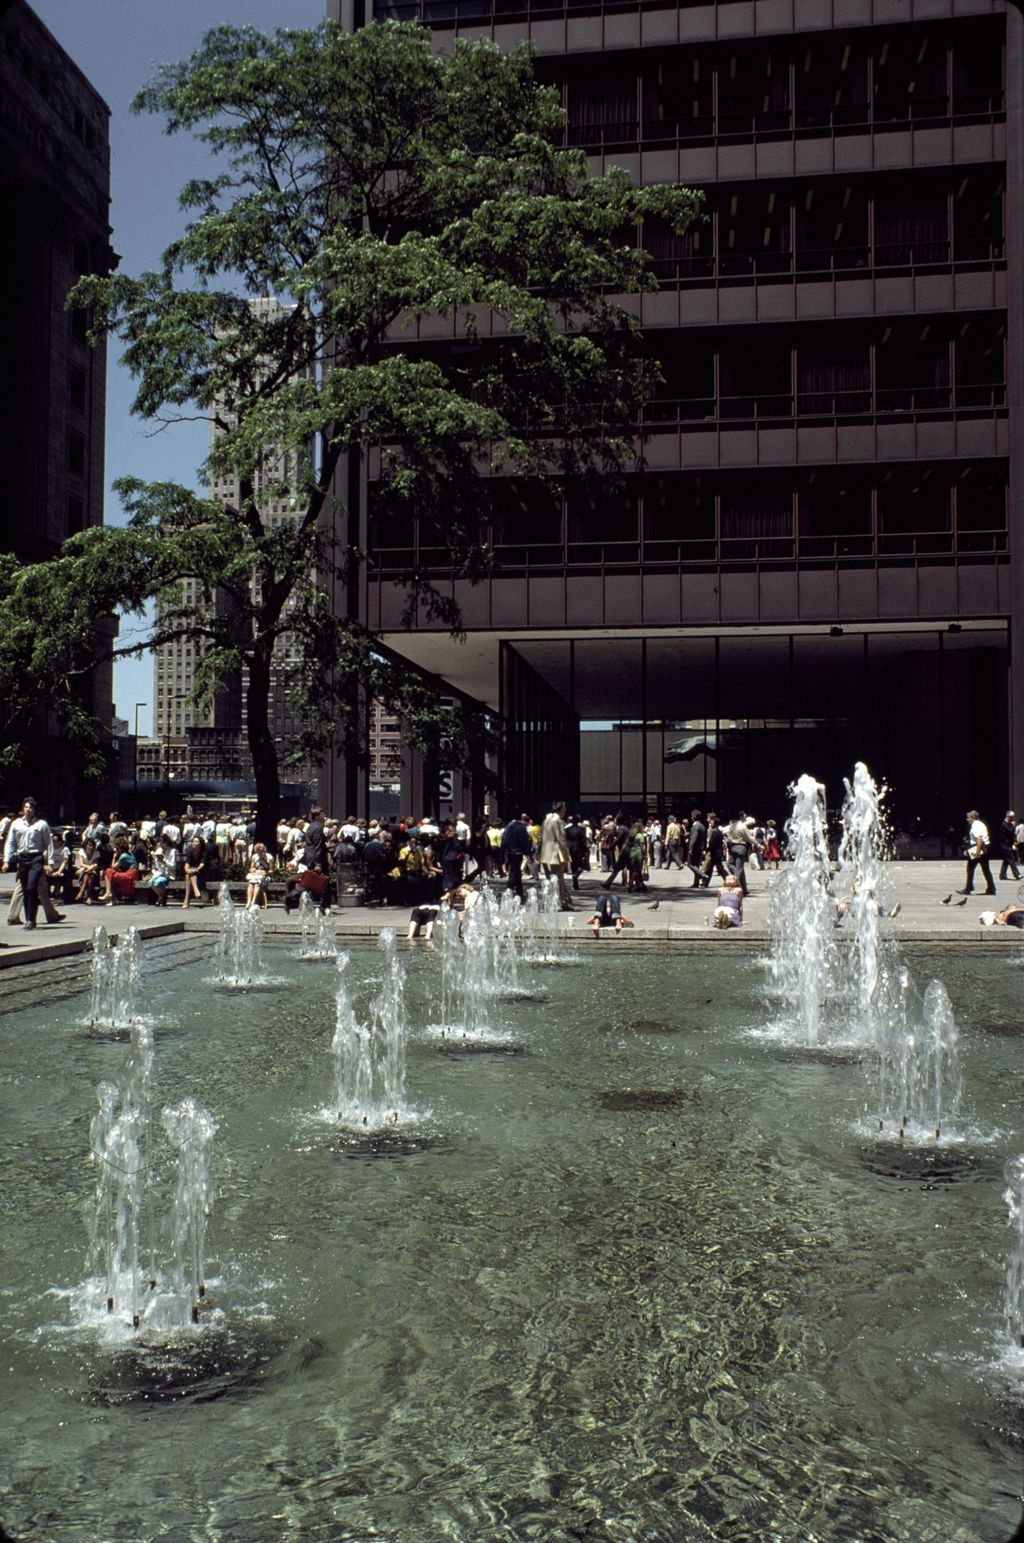 Miniature of Richard J. Daley Center plaza